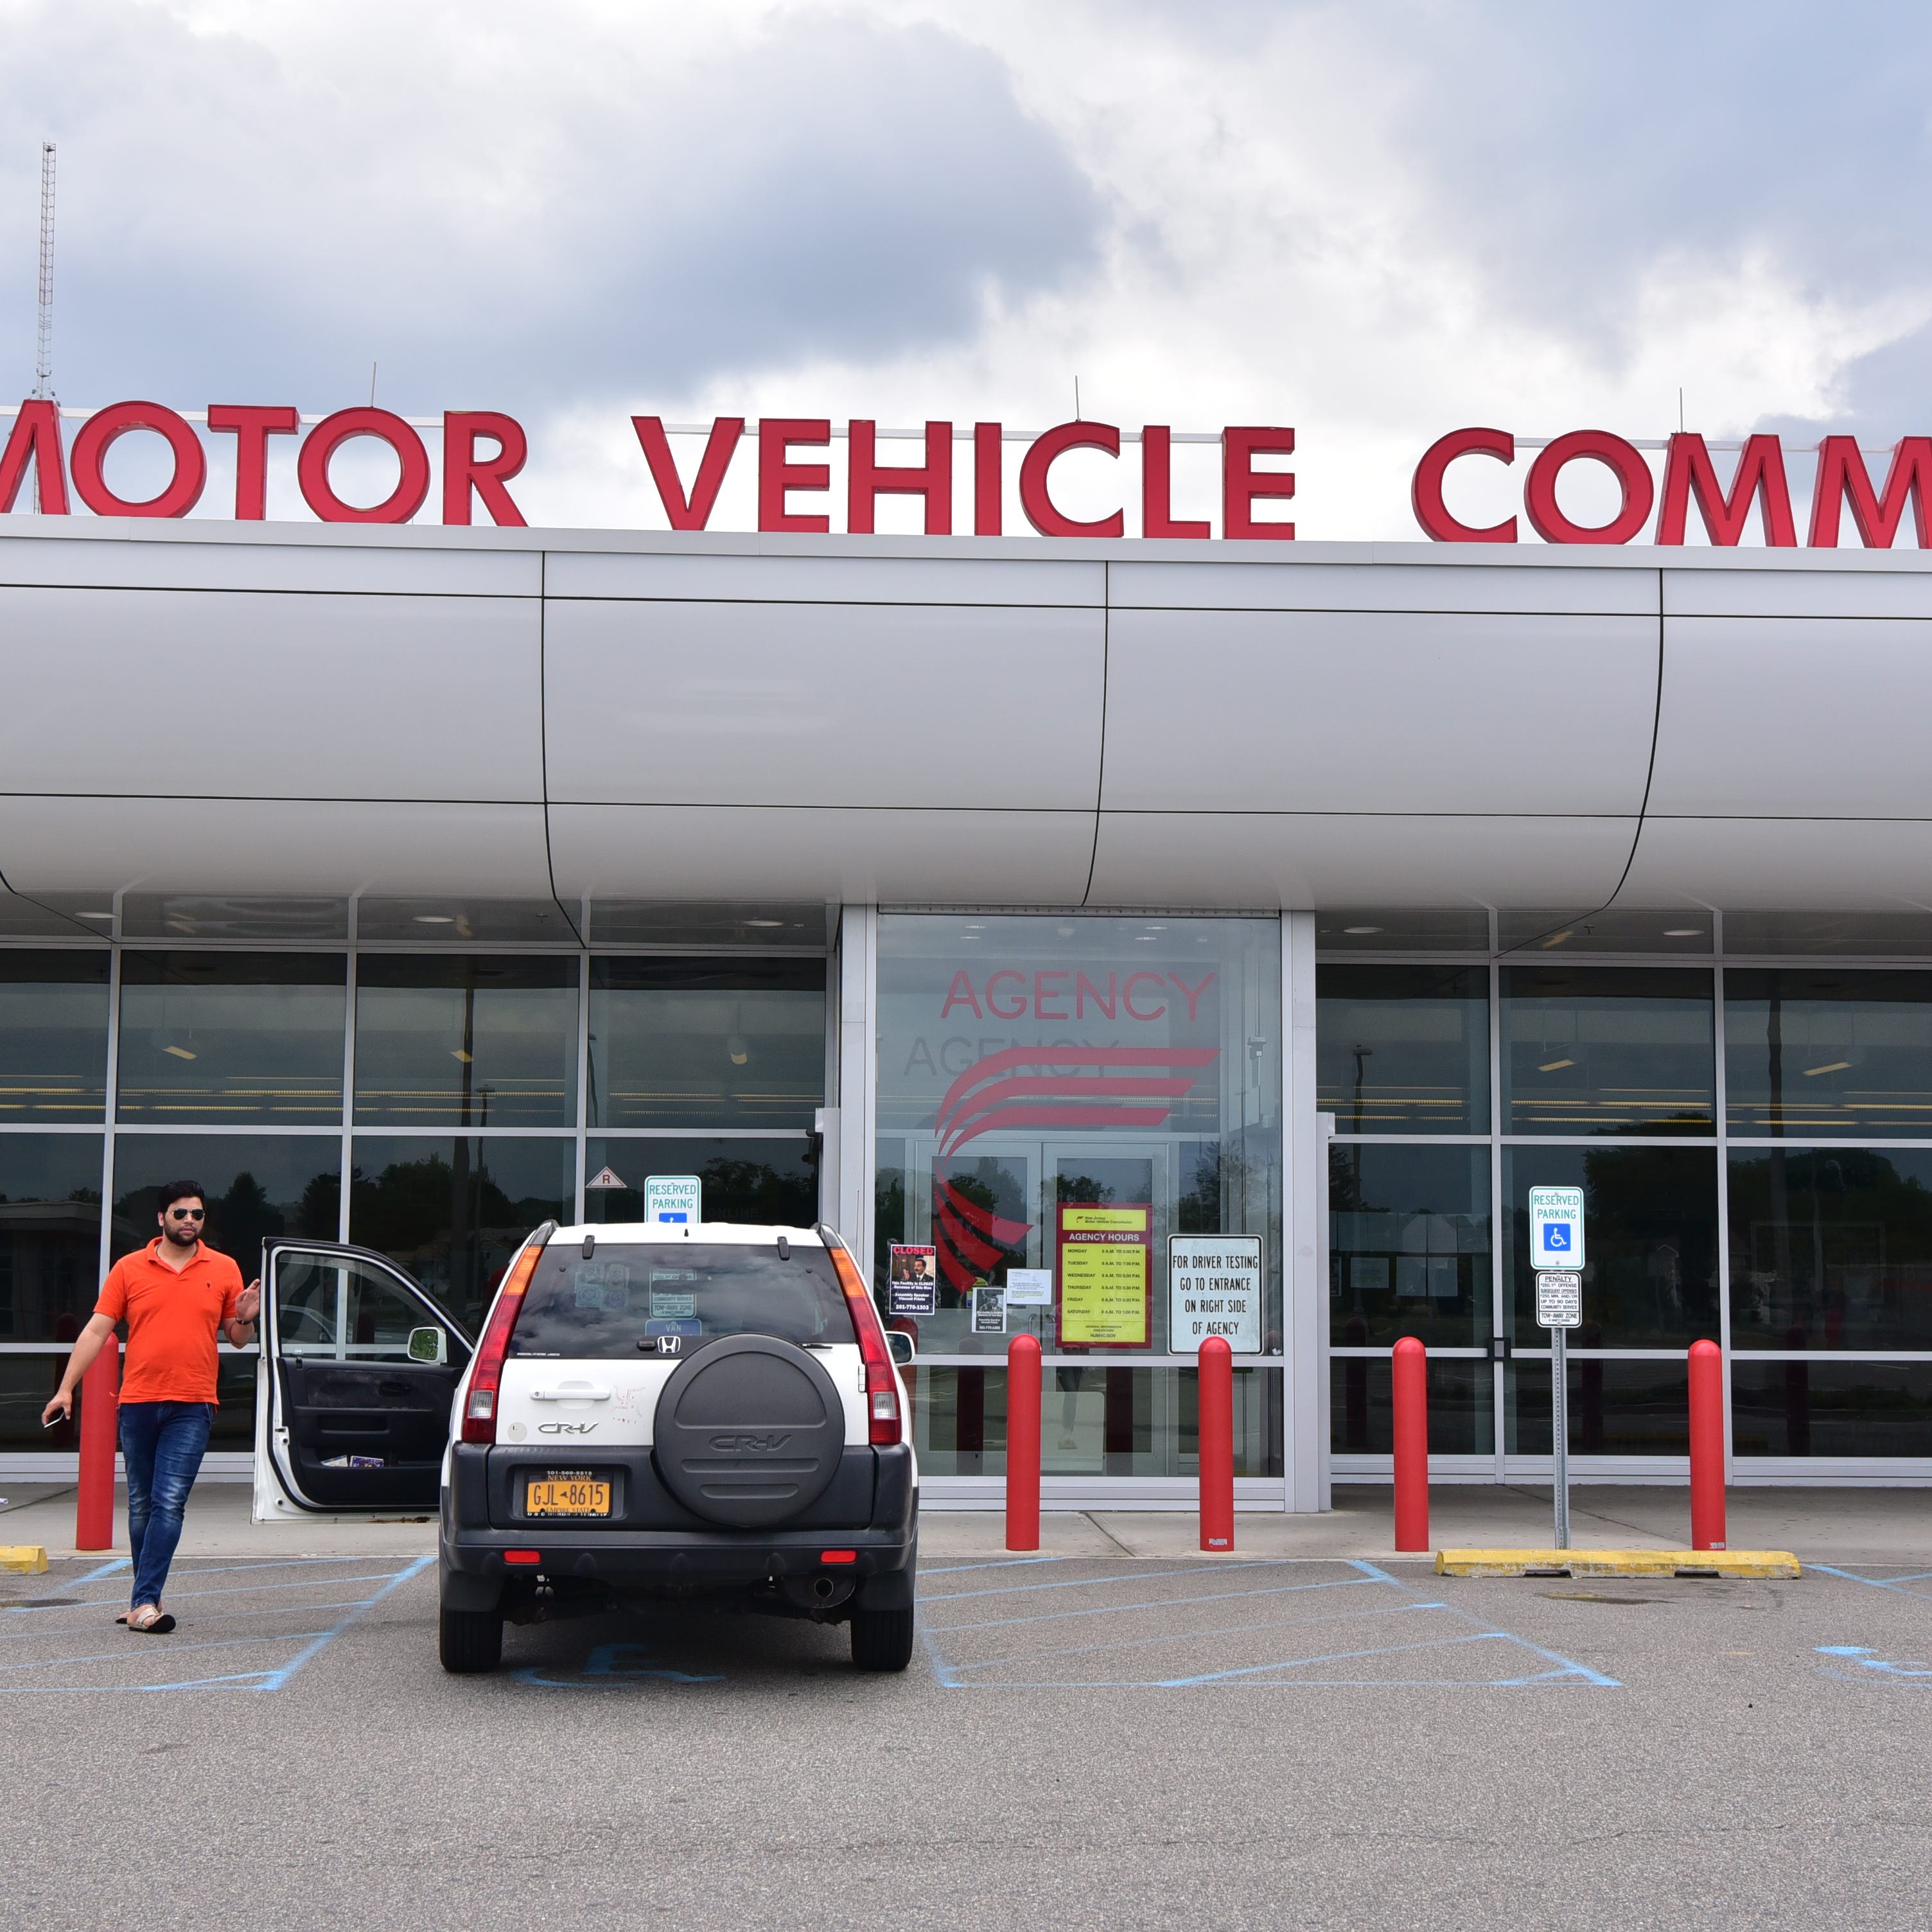 Nj Coronavirus Updates New Jersey Motor Vehicle Commission Closes